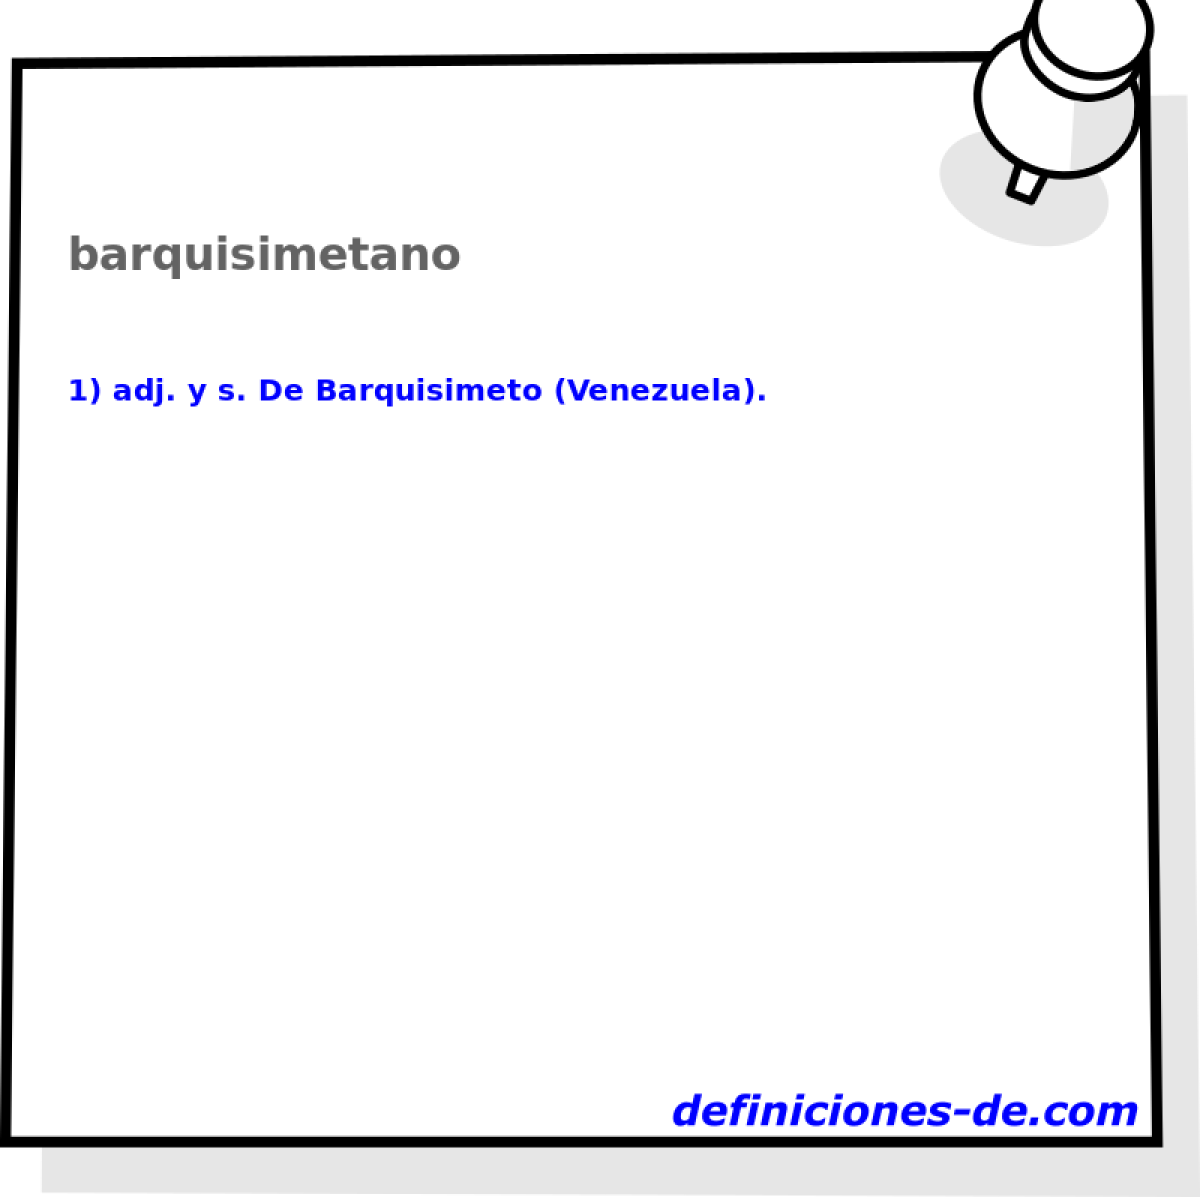 barquisimetano 